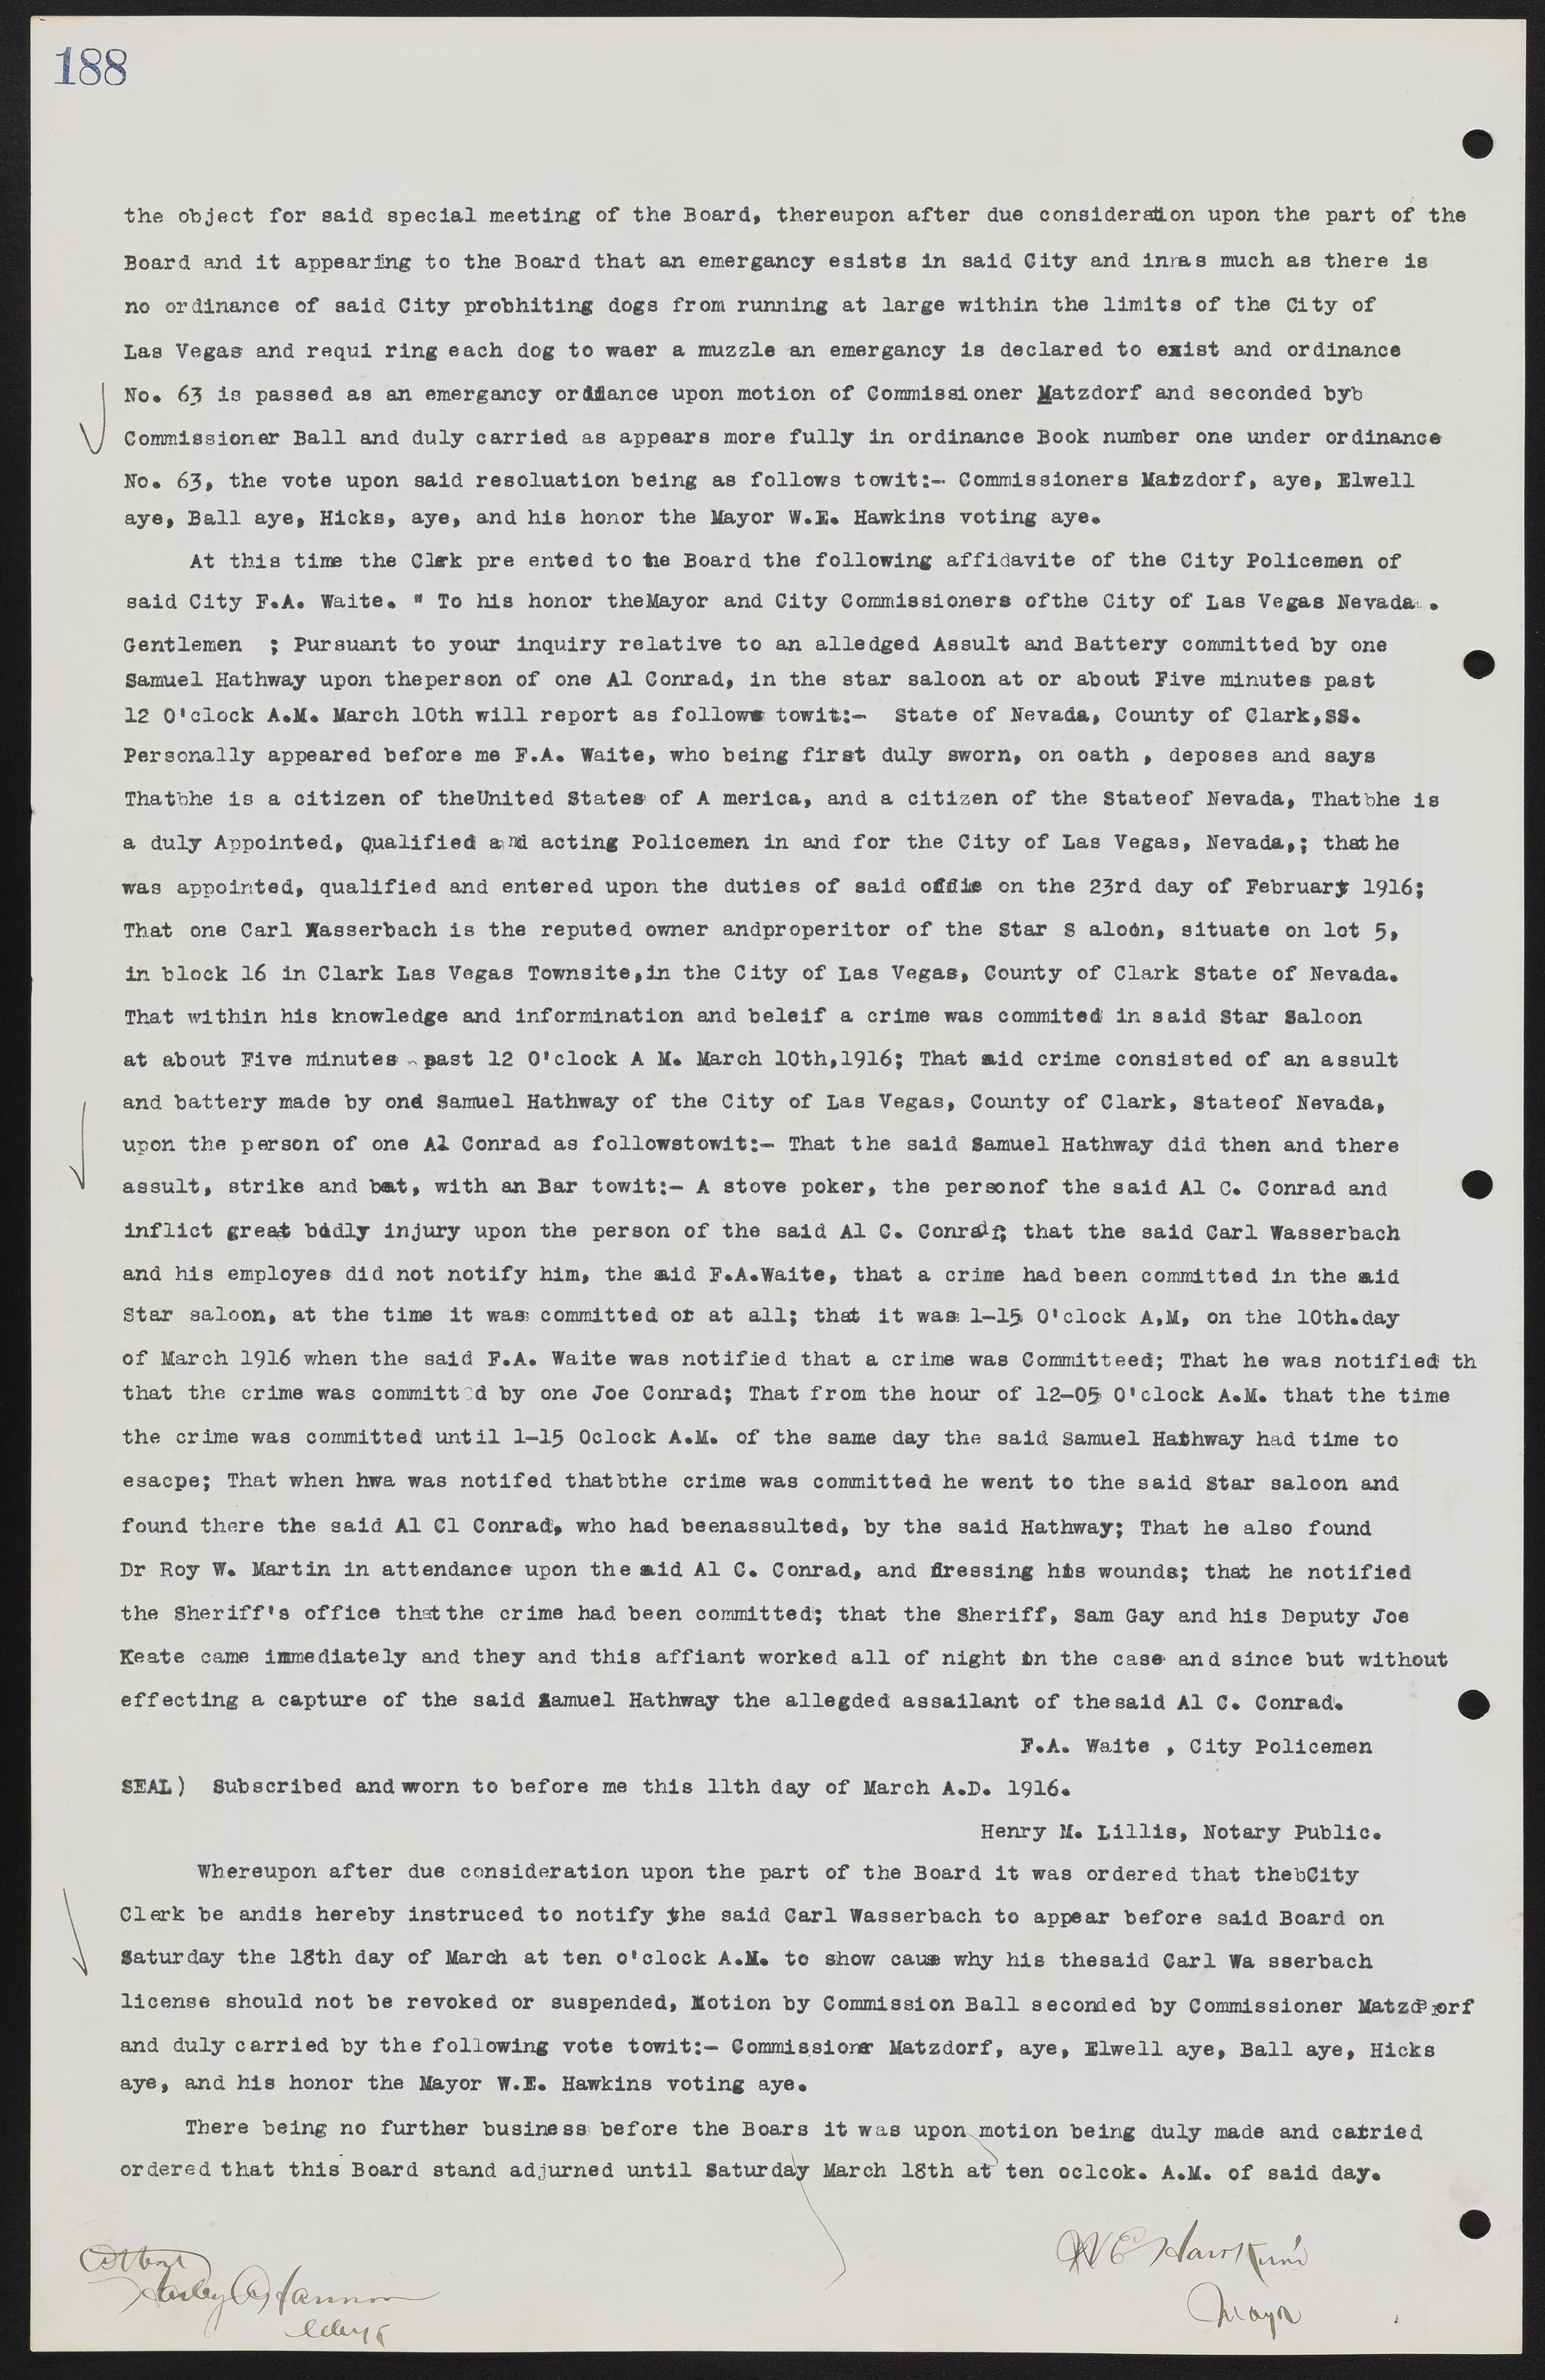 Las Vegas City Commission Minutes, June 22, 1911 to February 7, 1922, lvc000001-204